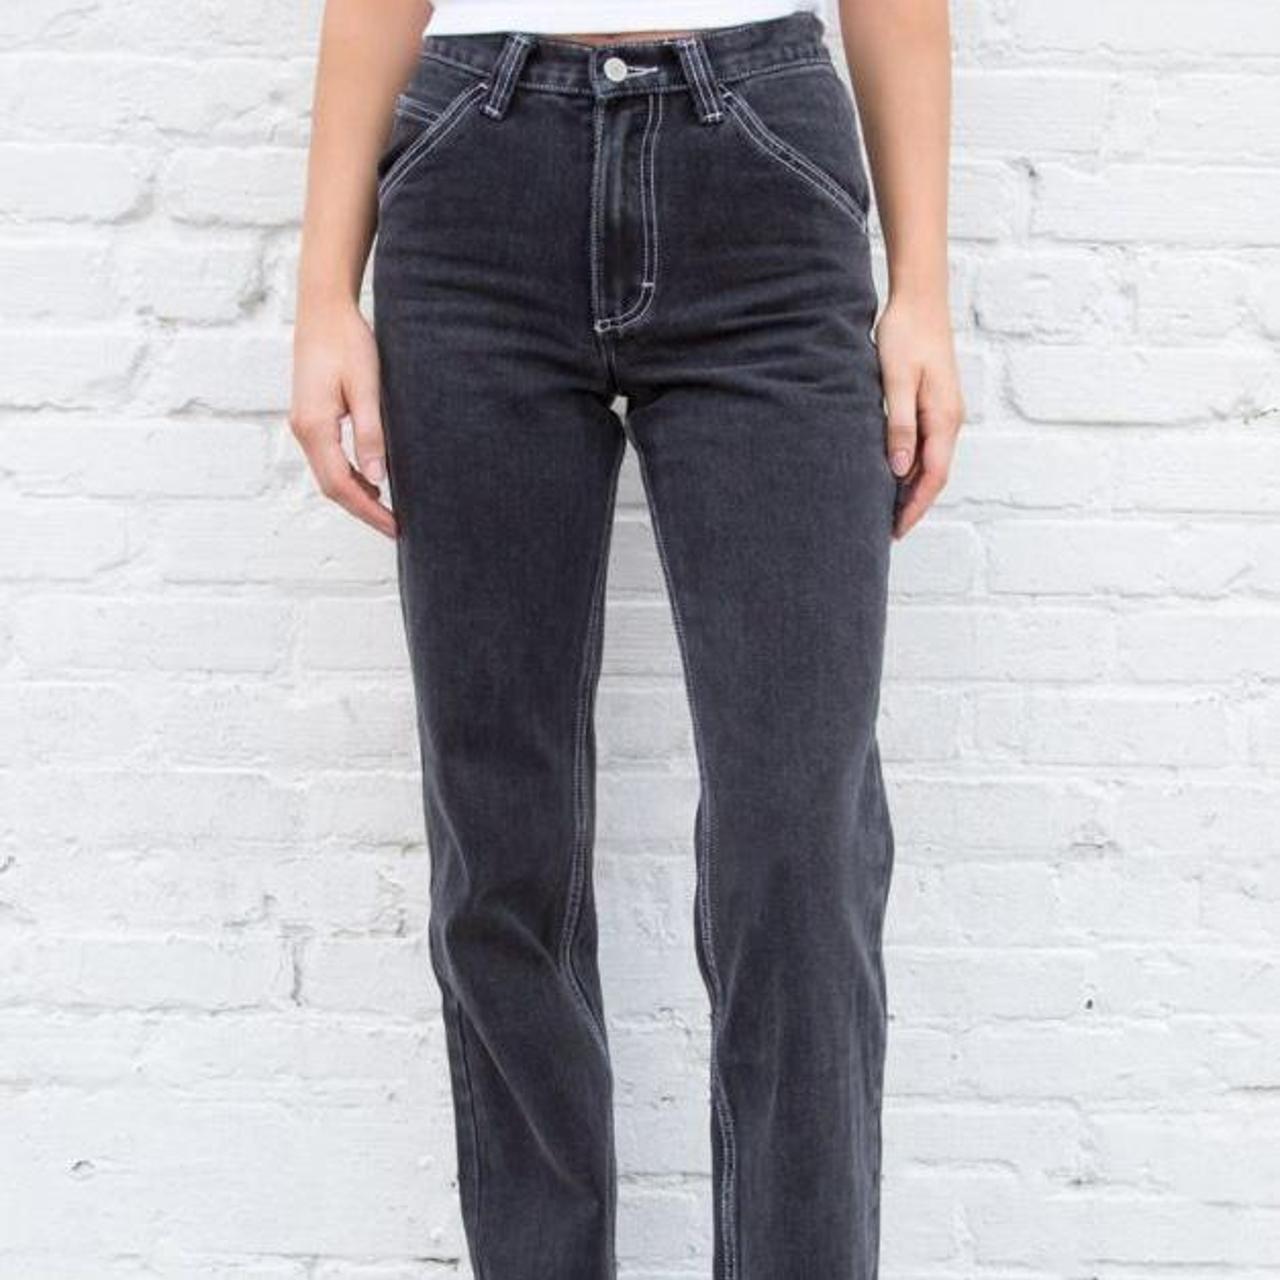 Black CRISPINA jeans brandy Melville (Size M) - Depop